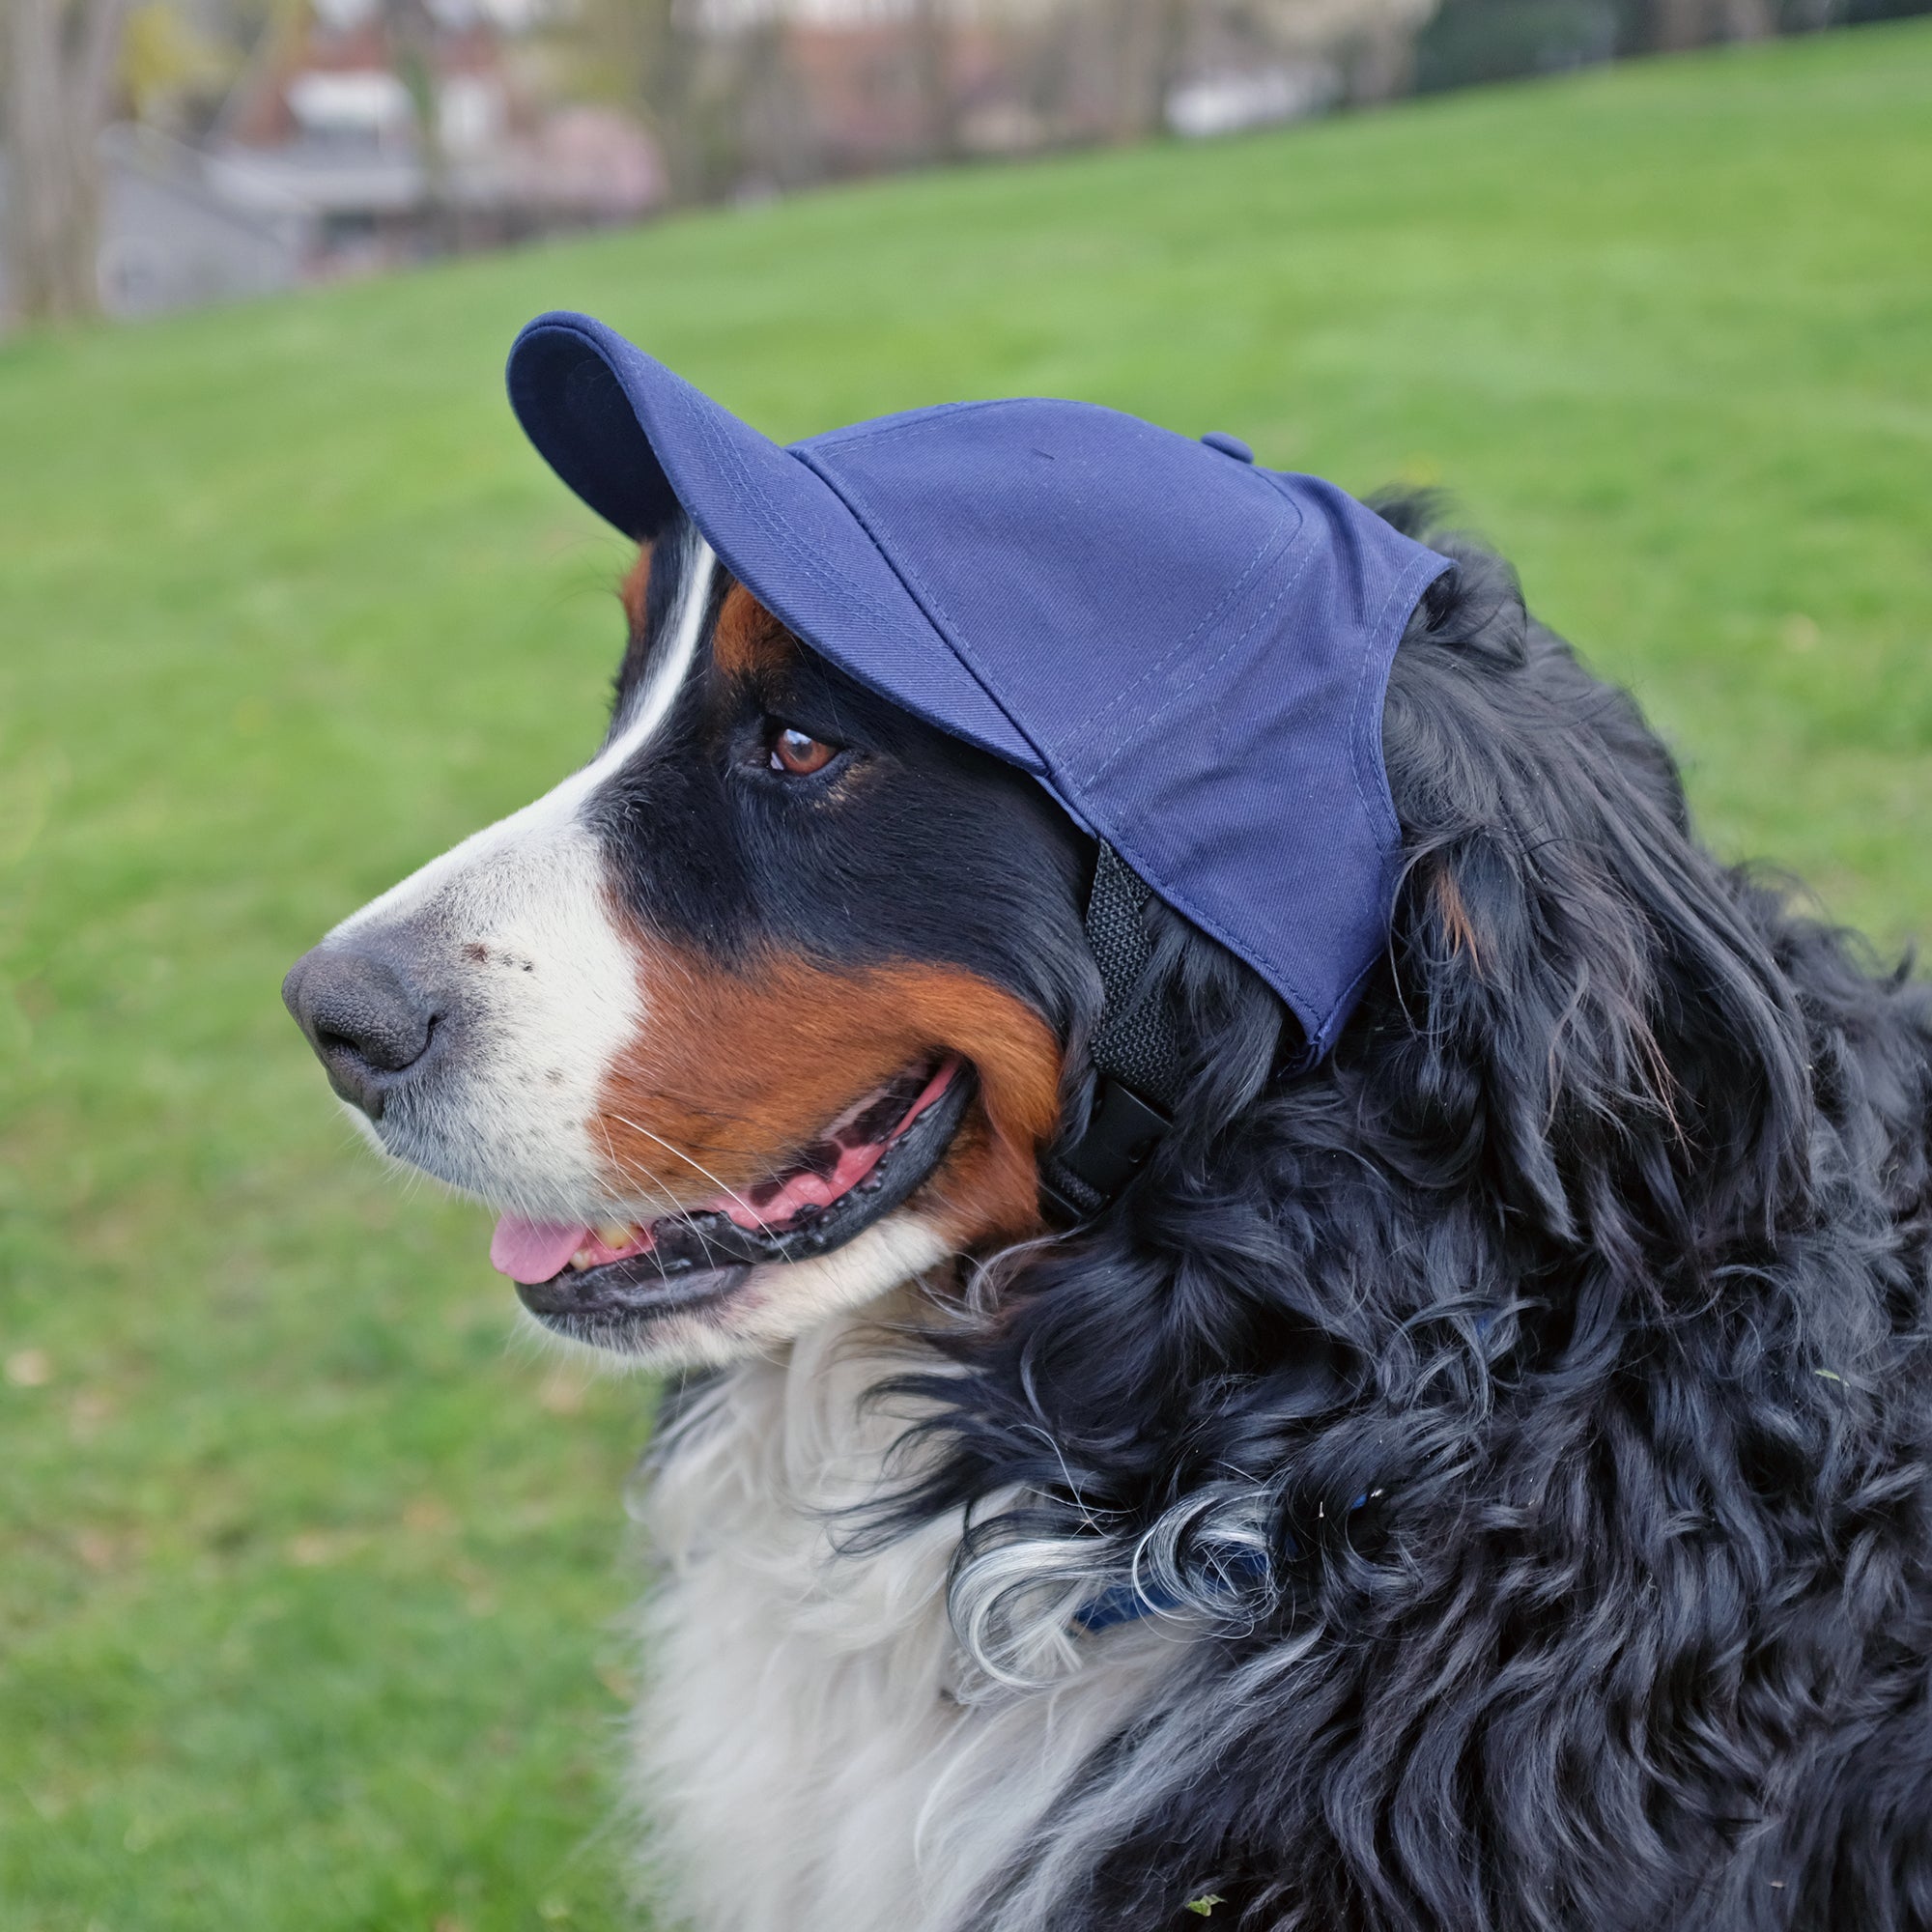 LA Dodgers Dog Baseball Hat / Cap - Blue - Pet Supply Mafia